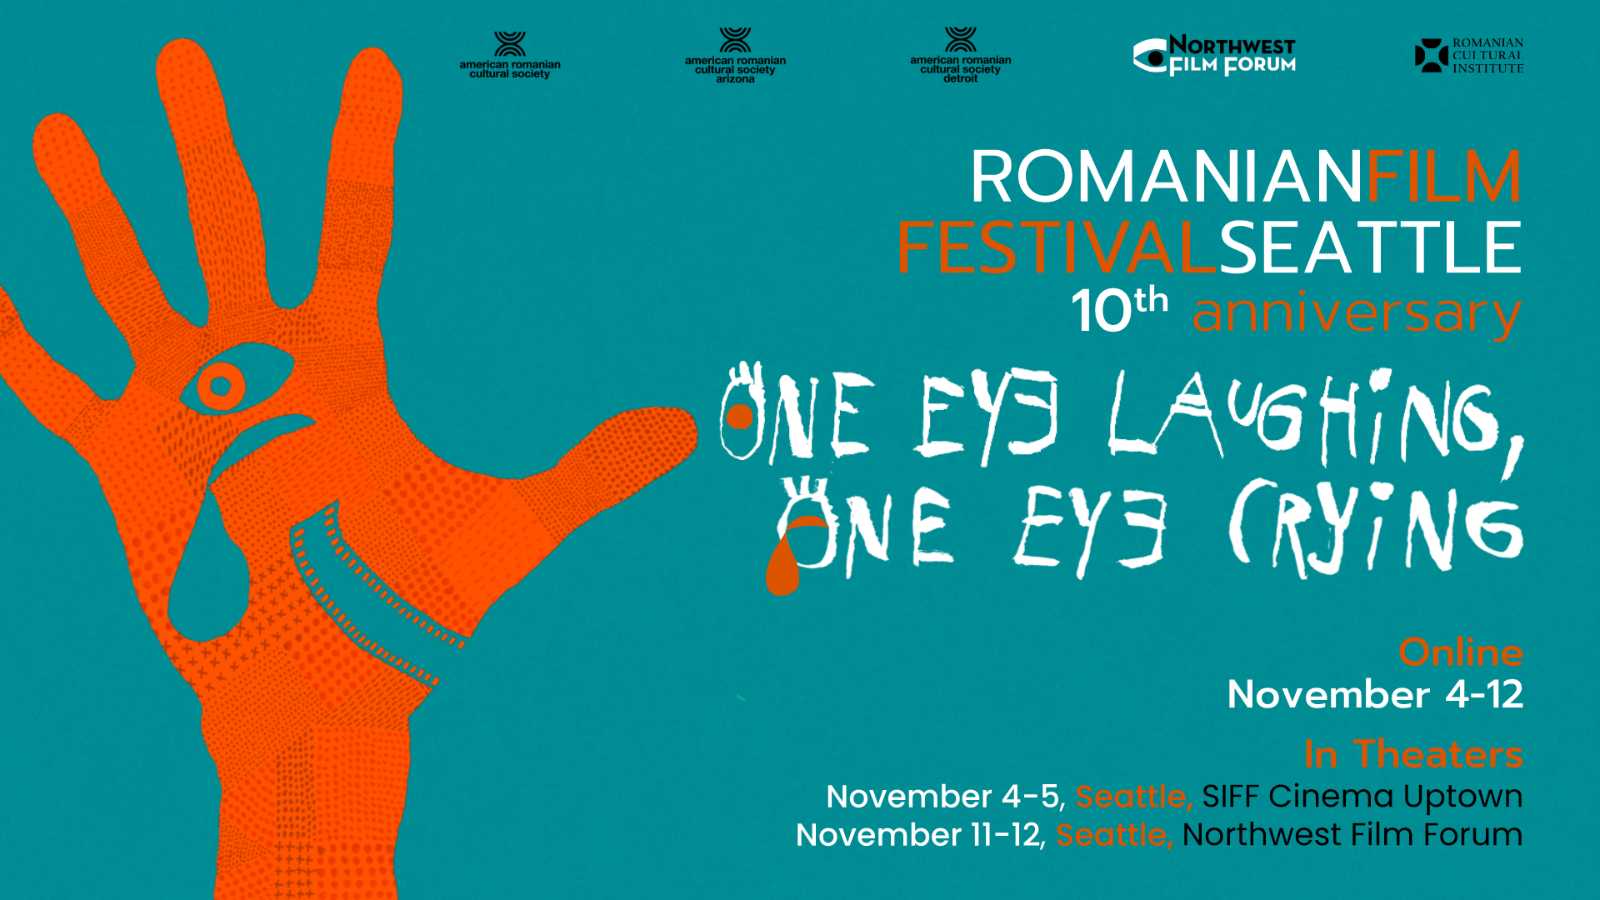 The Romanian Film Festival Seattle, 10th Edition